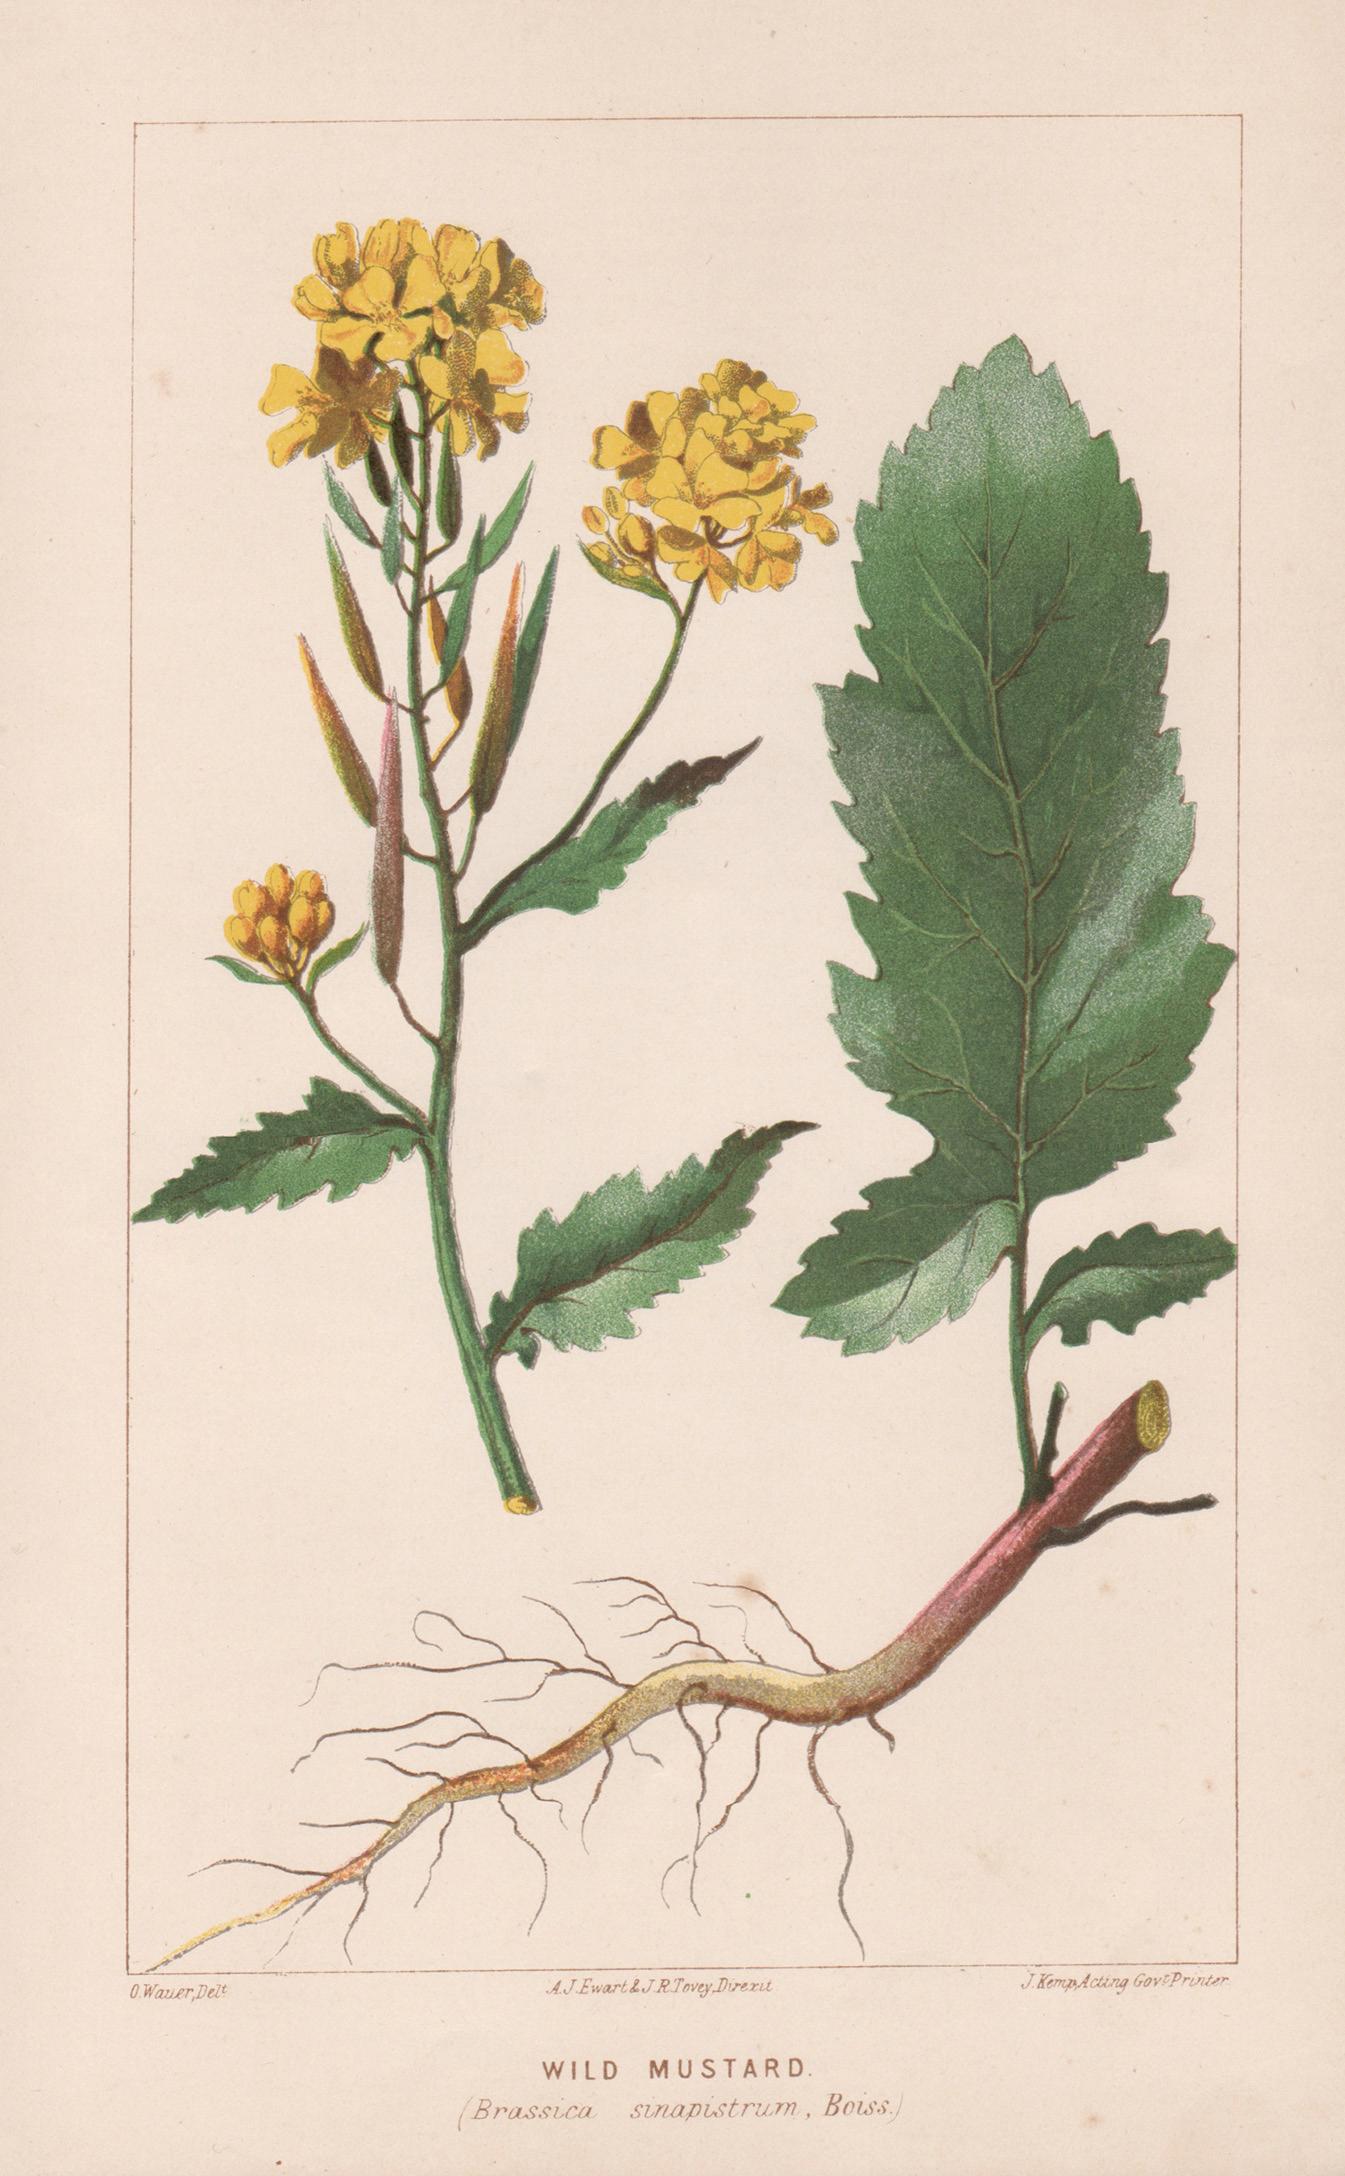 O Wauer Still-Life Print - Wild Mustard (Brassica sinapistrum), antique botanical lithograph